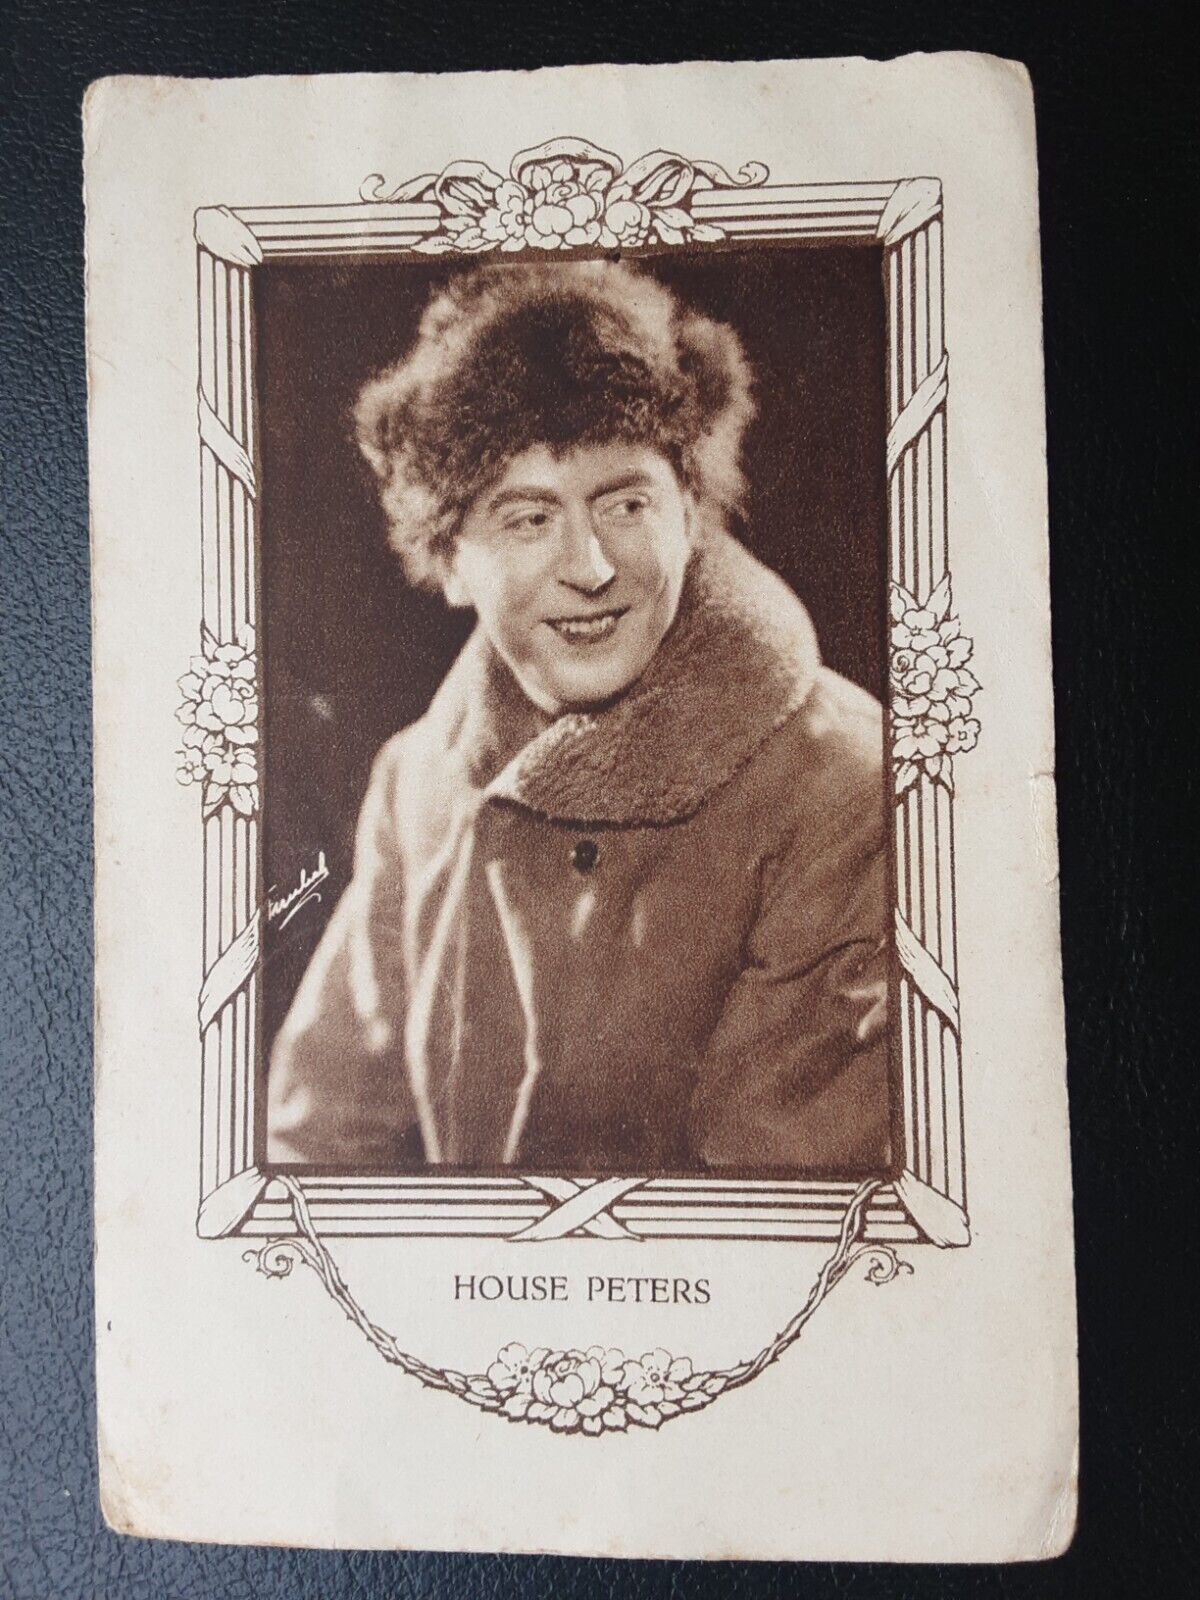 1930 HOUSE PETERS ,  SPANISH CHOCOLATE CARD, ARTISTAS DE CINE SERIES